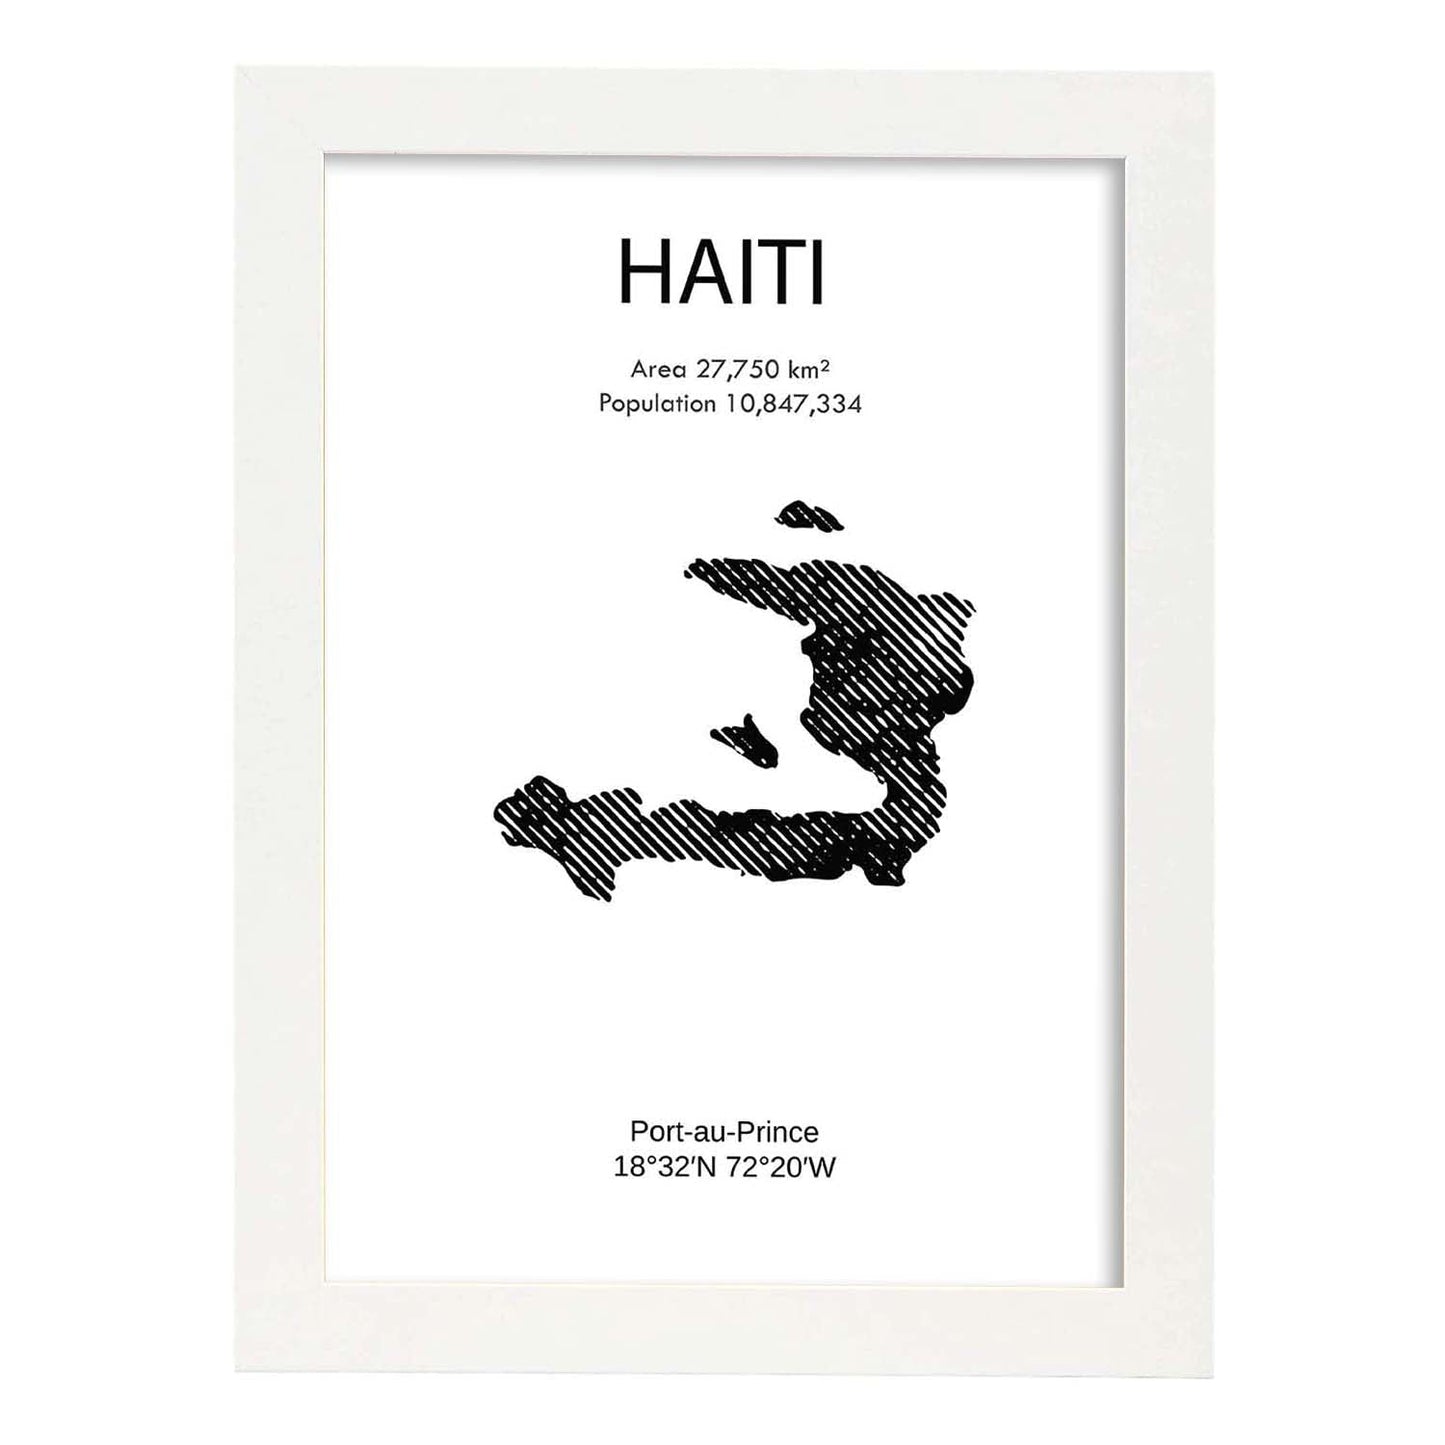 Poster de Haiti. Láminas de paises y continentes del mundo.-Artwork-Nacnic-A4-Marco Blanco-Nacnic Estudio SL